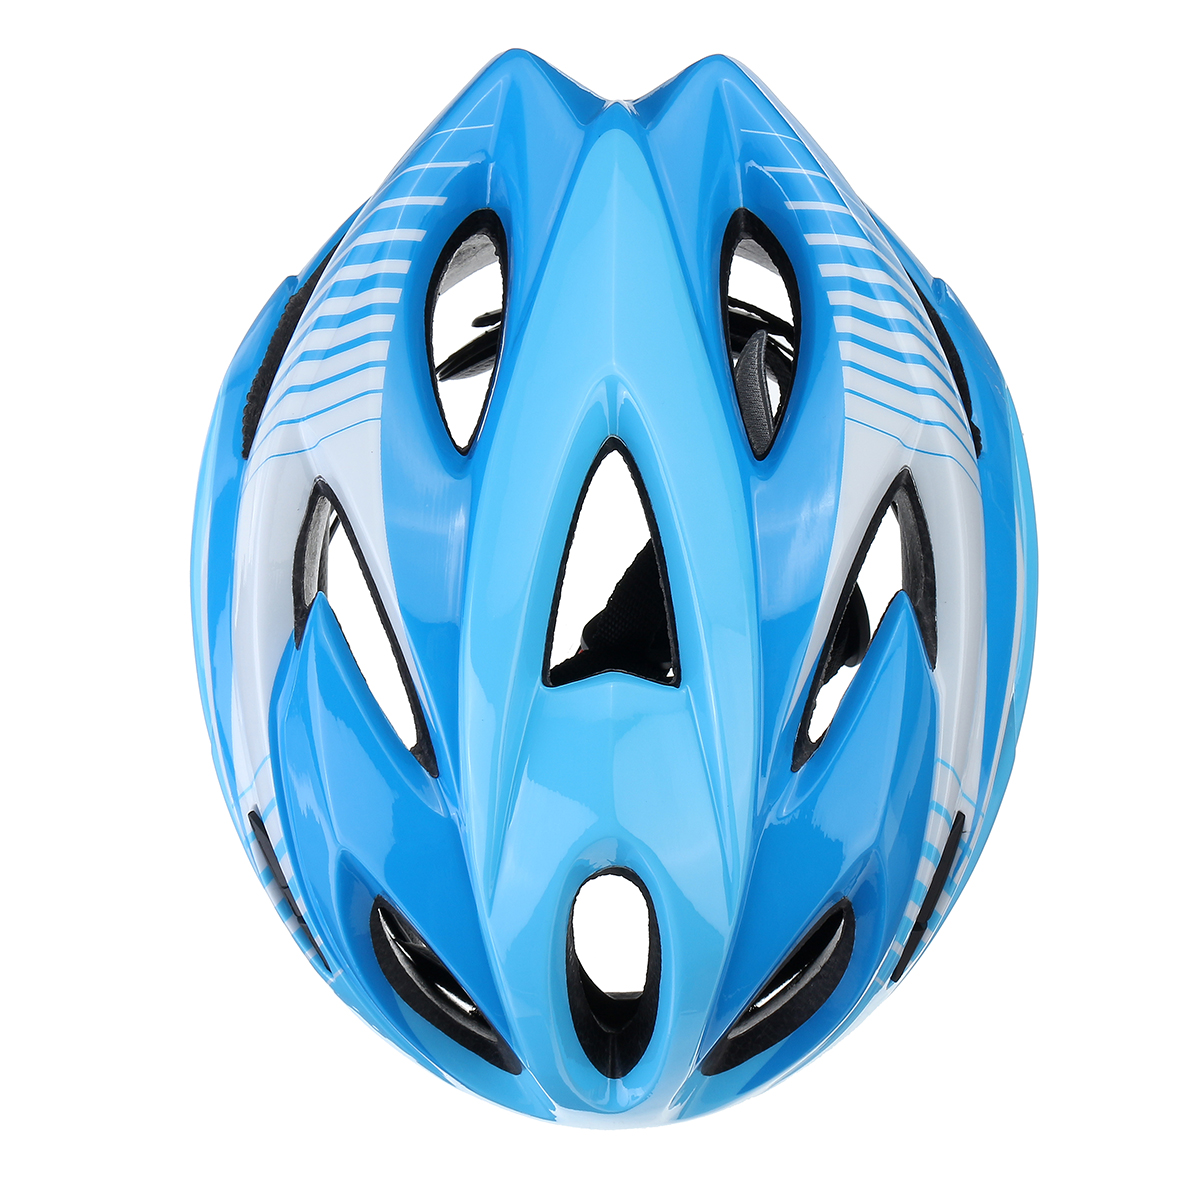 Kids-Helmet-Bicycle-Ultralight-Childrens-Protective-Gear-Girls-Cycling-Riding-Helmet-Kids-Bicycle-Sa-1796828-8